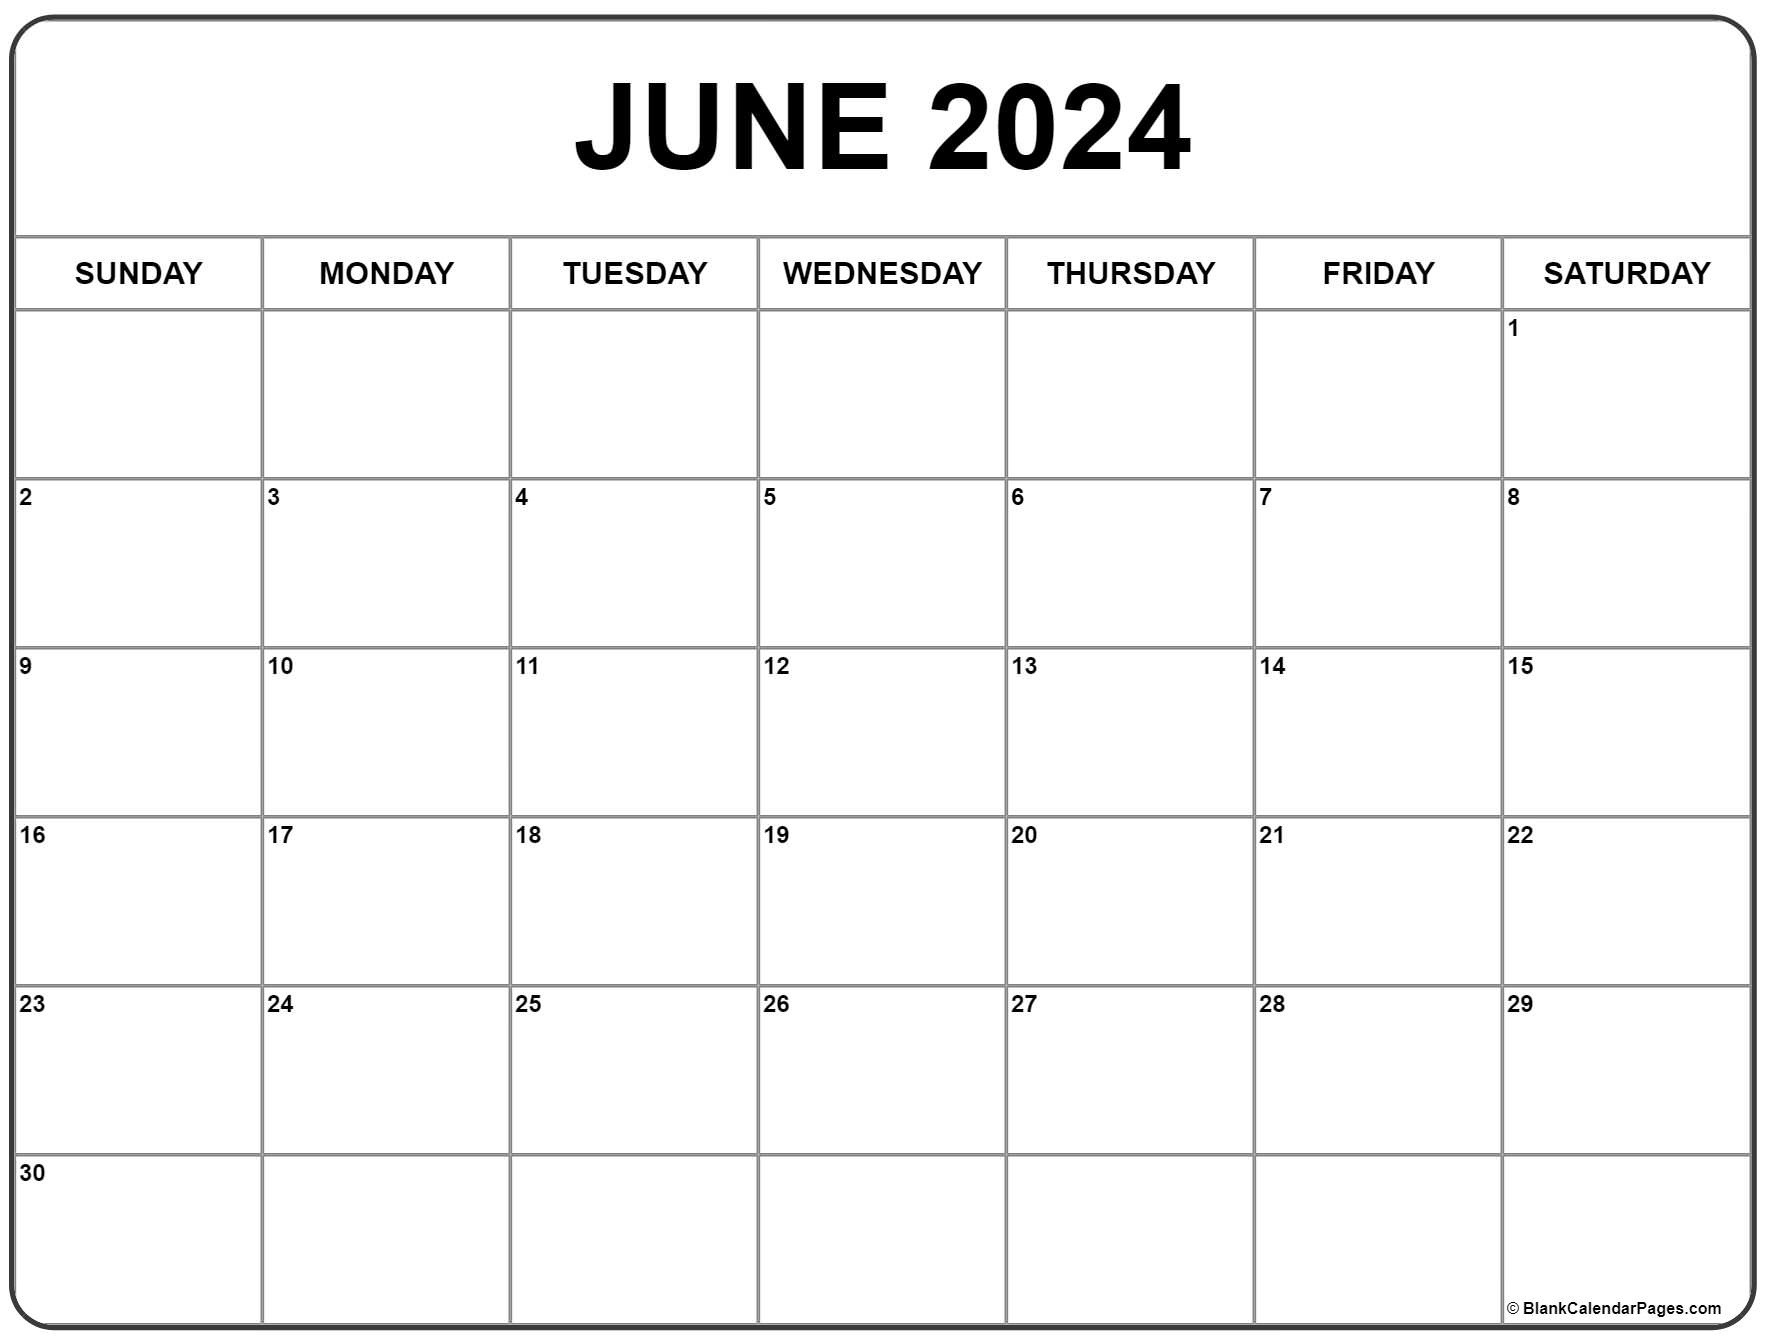 June 2024 Calendar | Free Printable Calendar inside June Daily Calendar 2024